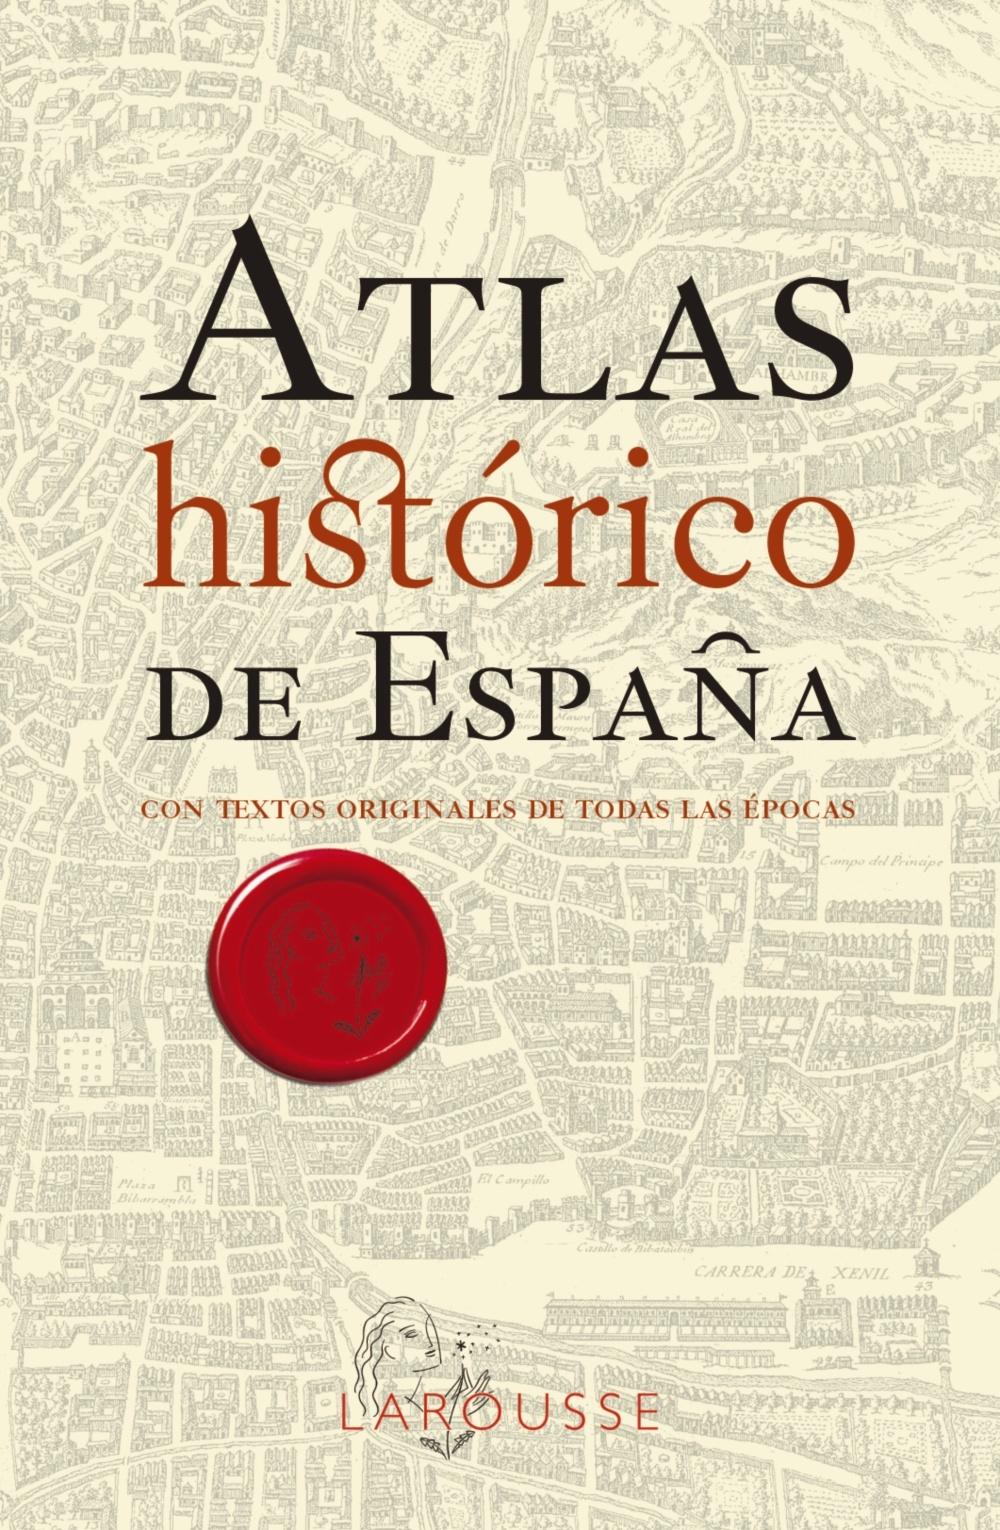 Atlas histórico de España "Con textos orginales de todas las épocas"